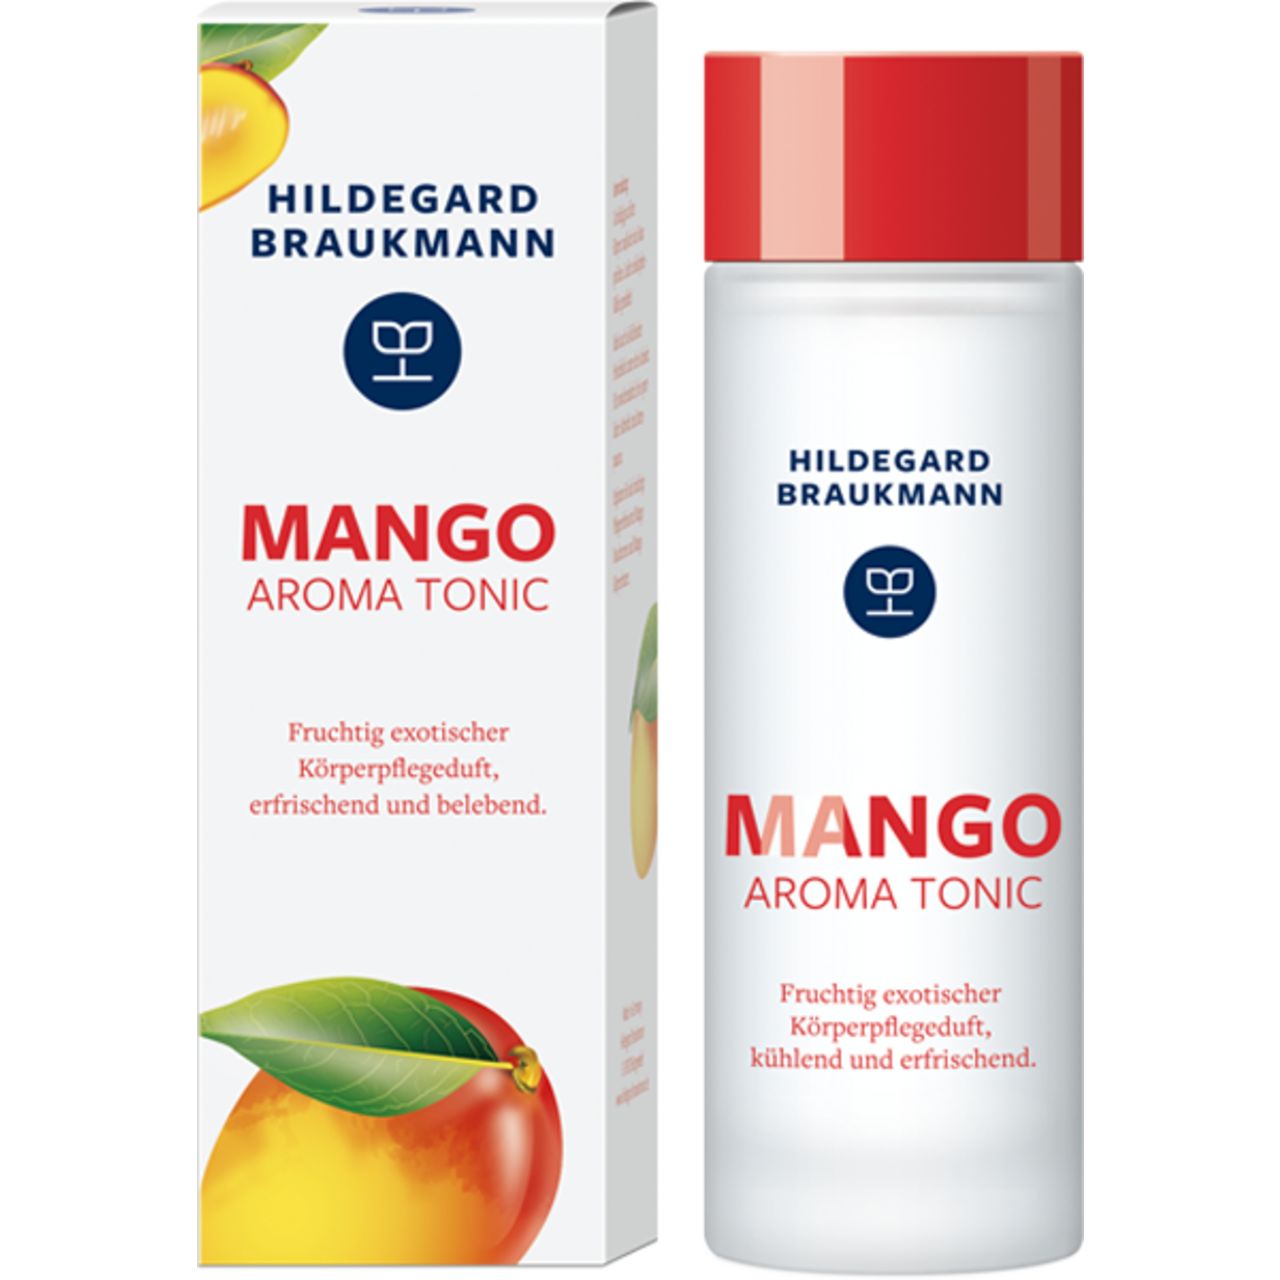 Hildegard Braukmann, Mango Aroma Tonic